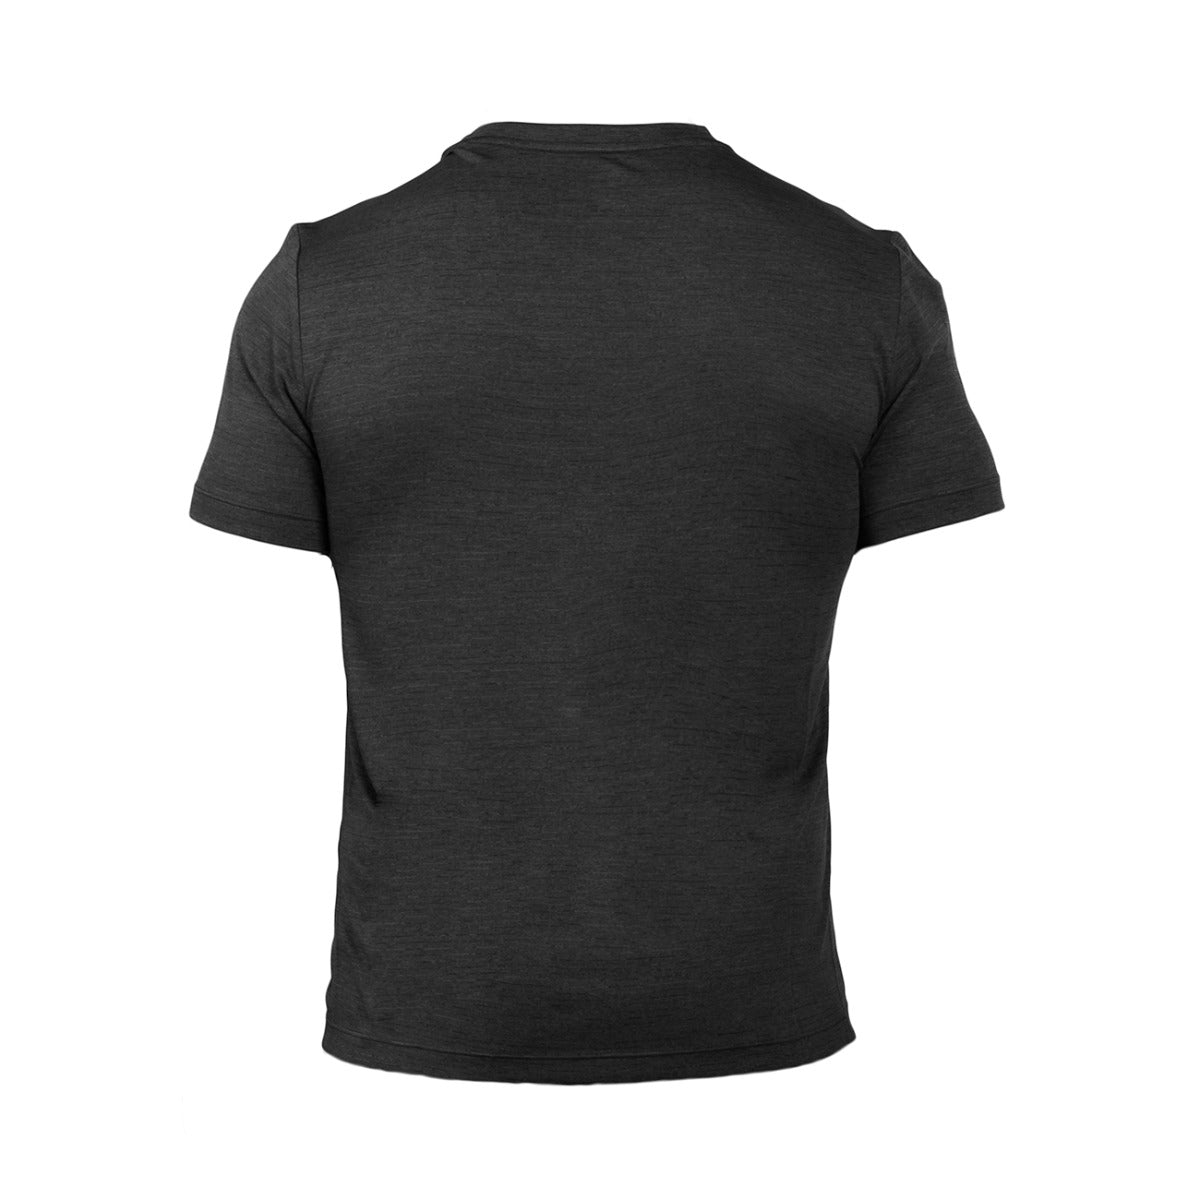 Anta Cross Training T-Shirt For Men, Black & Grey